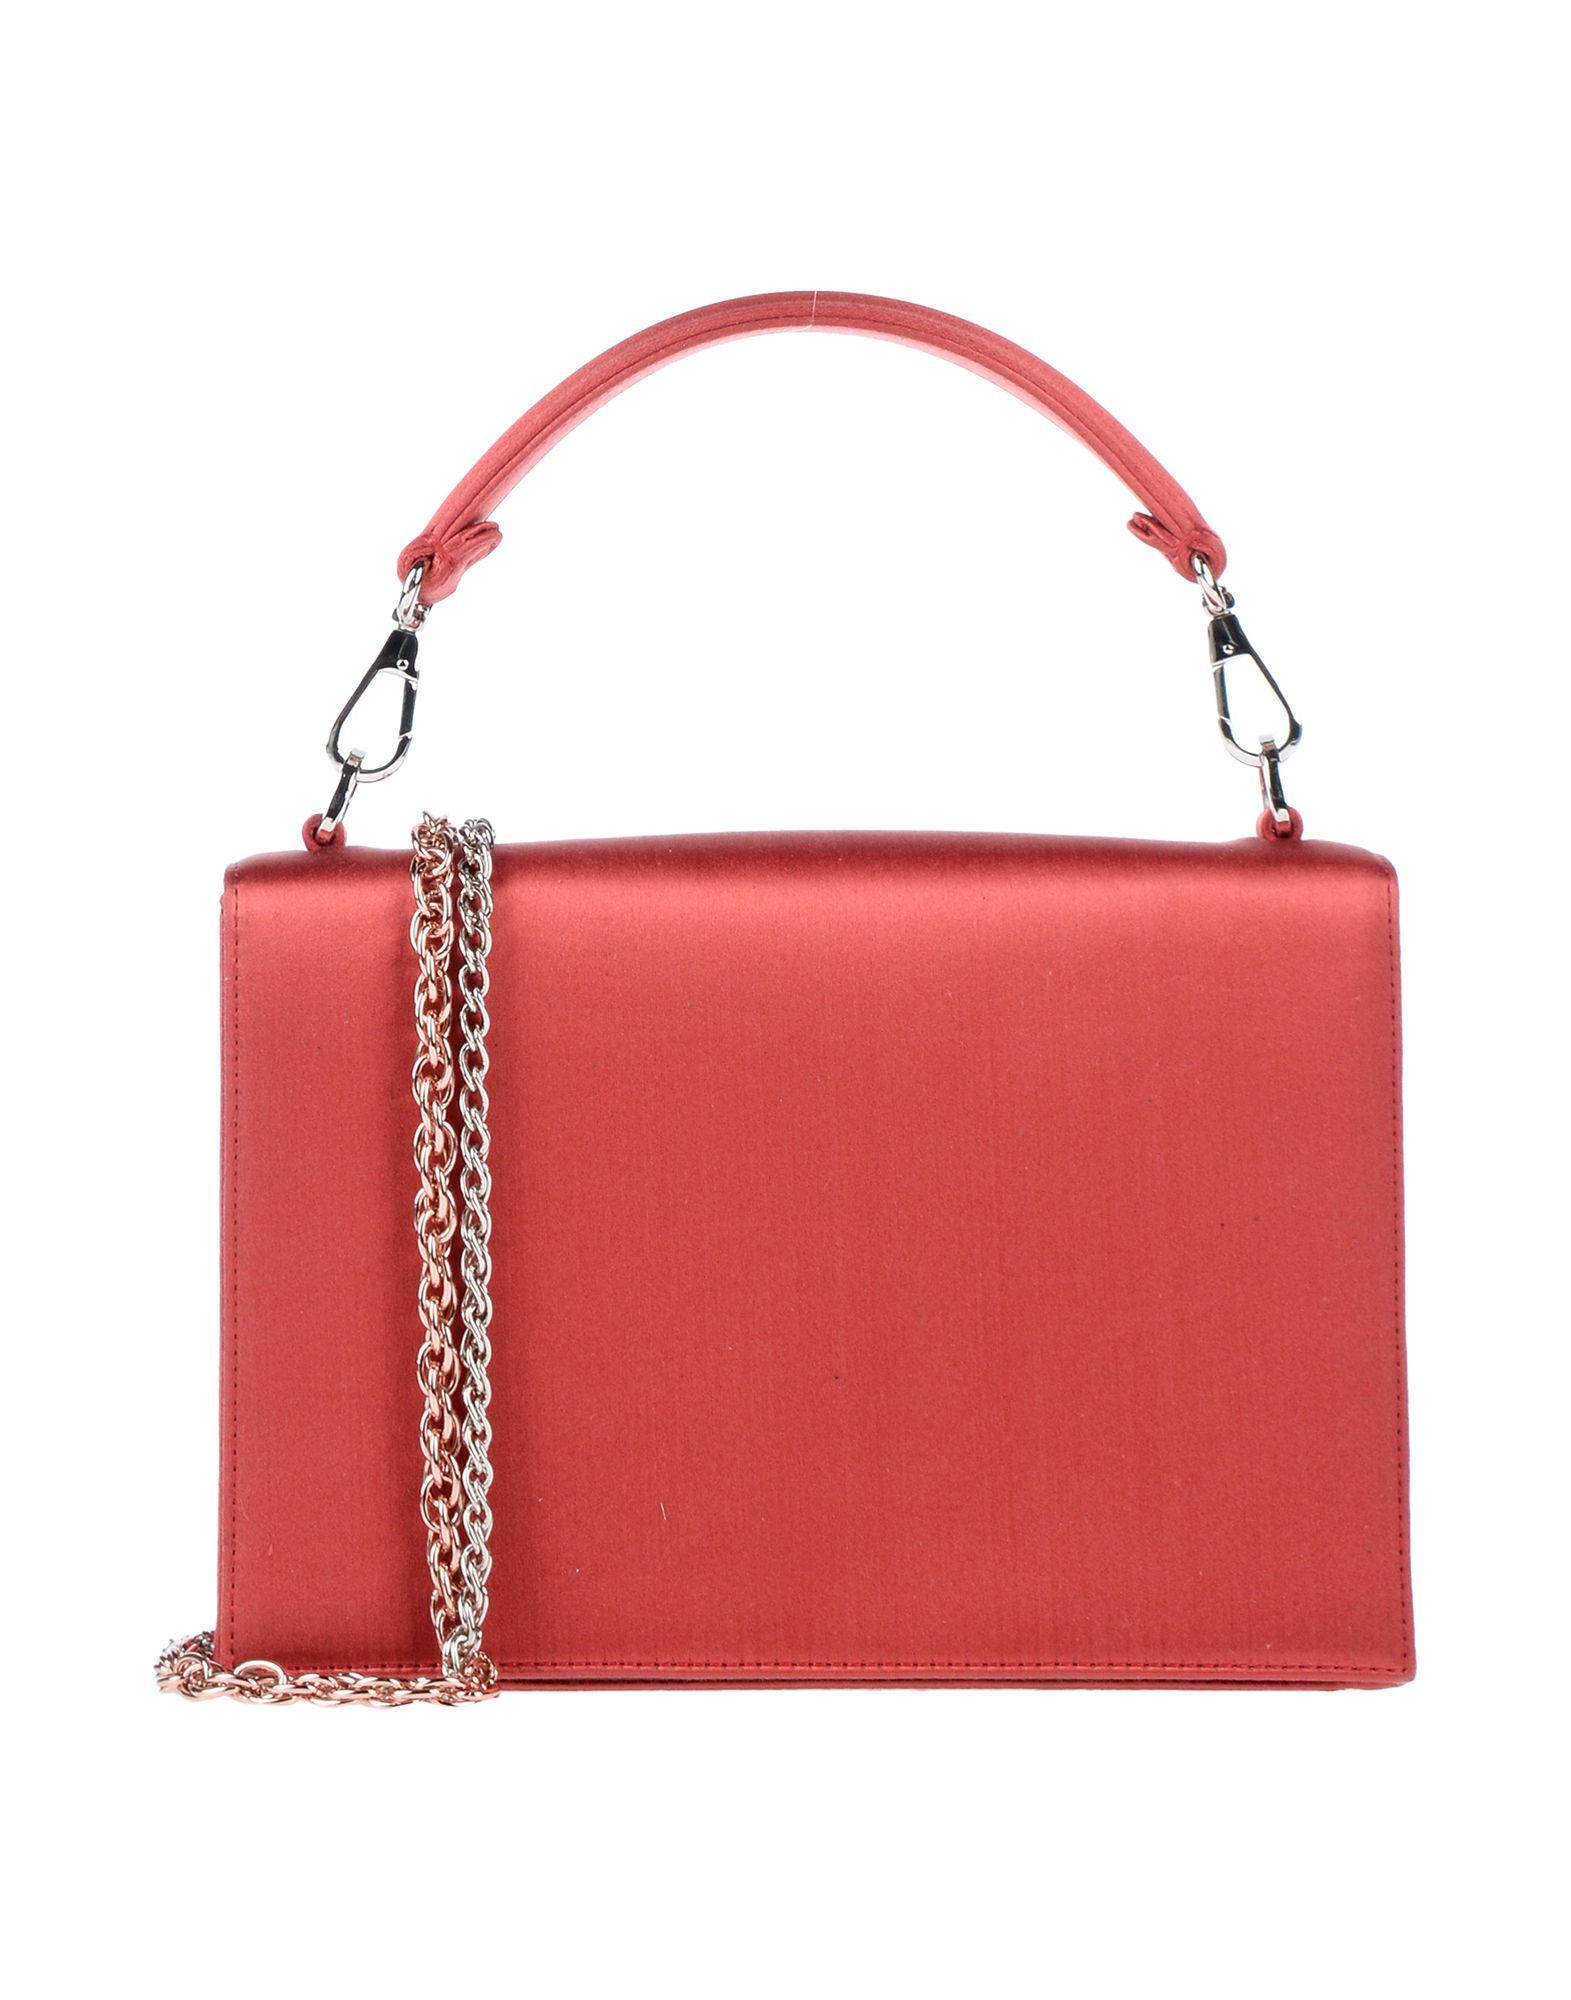 Rodo Satin Handbag in Coral (Red) - Lyst